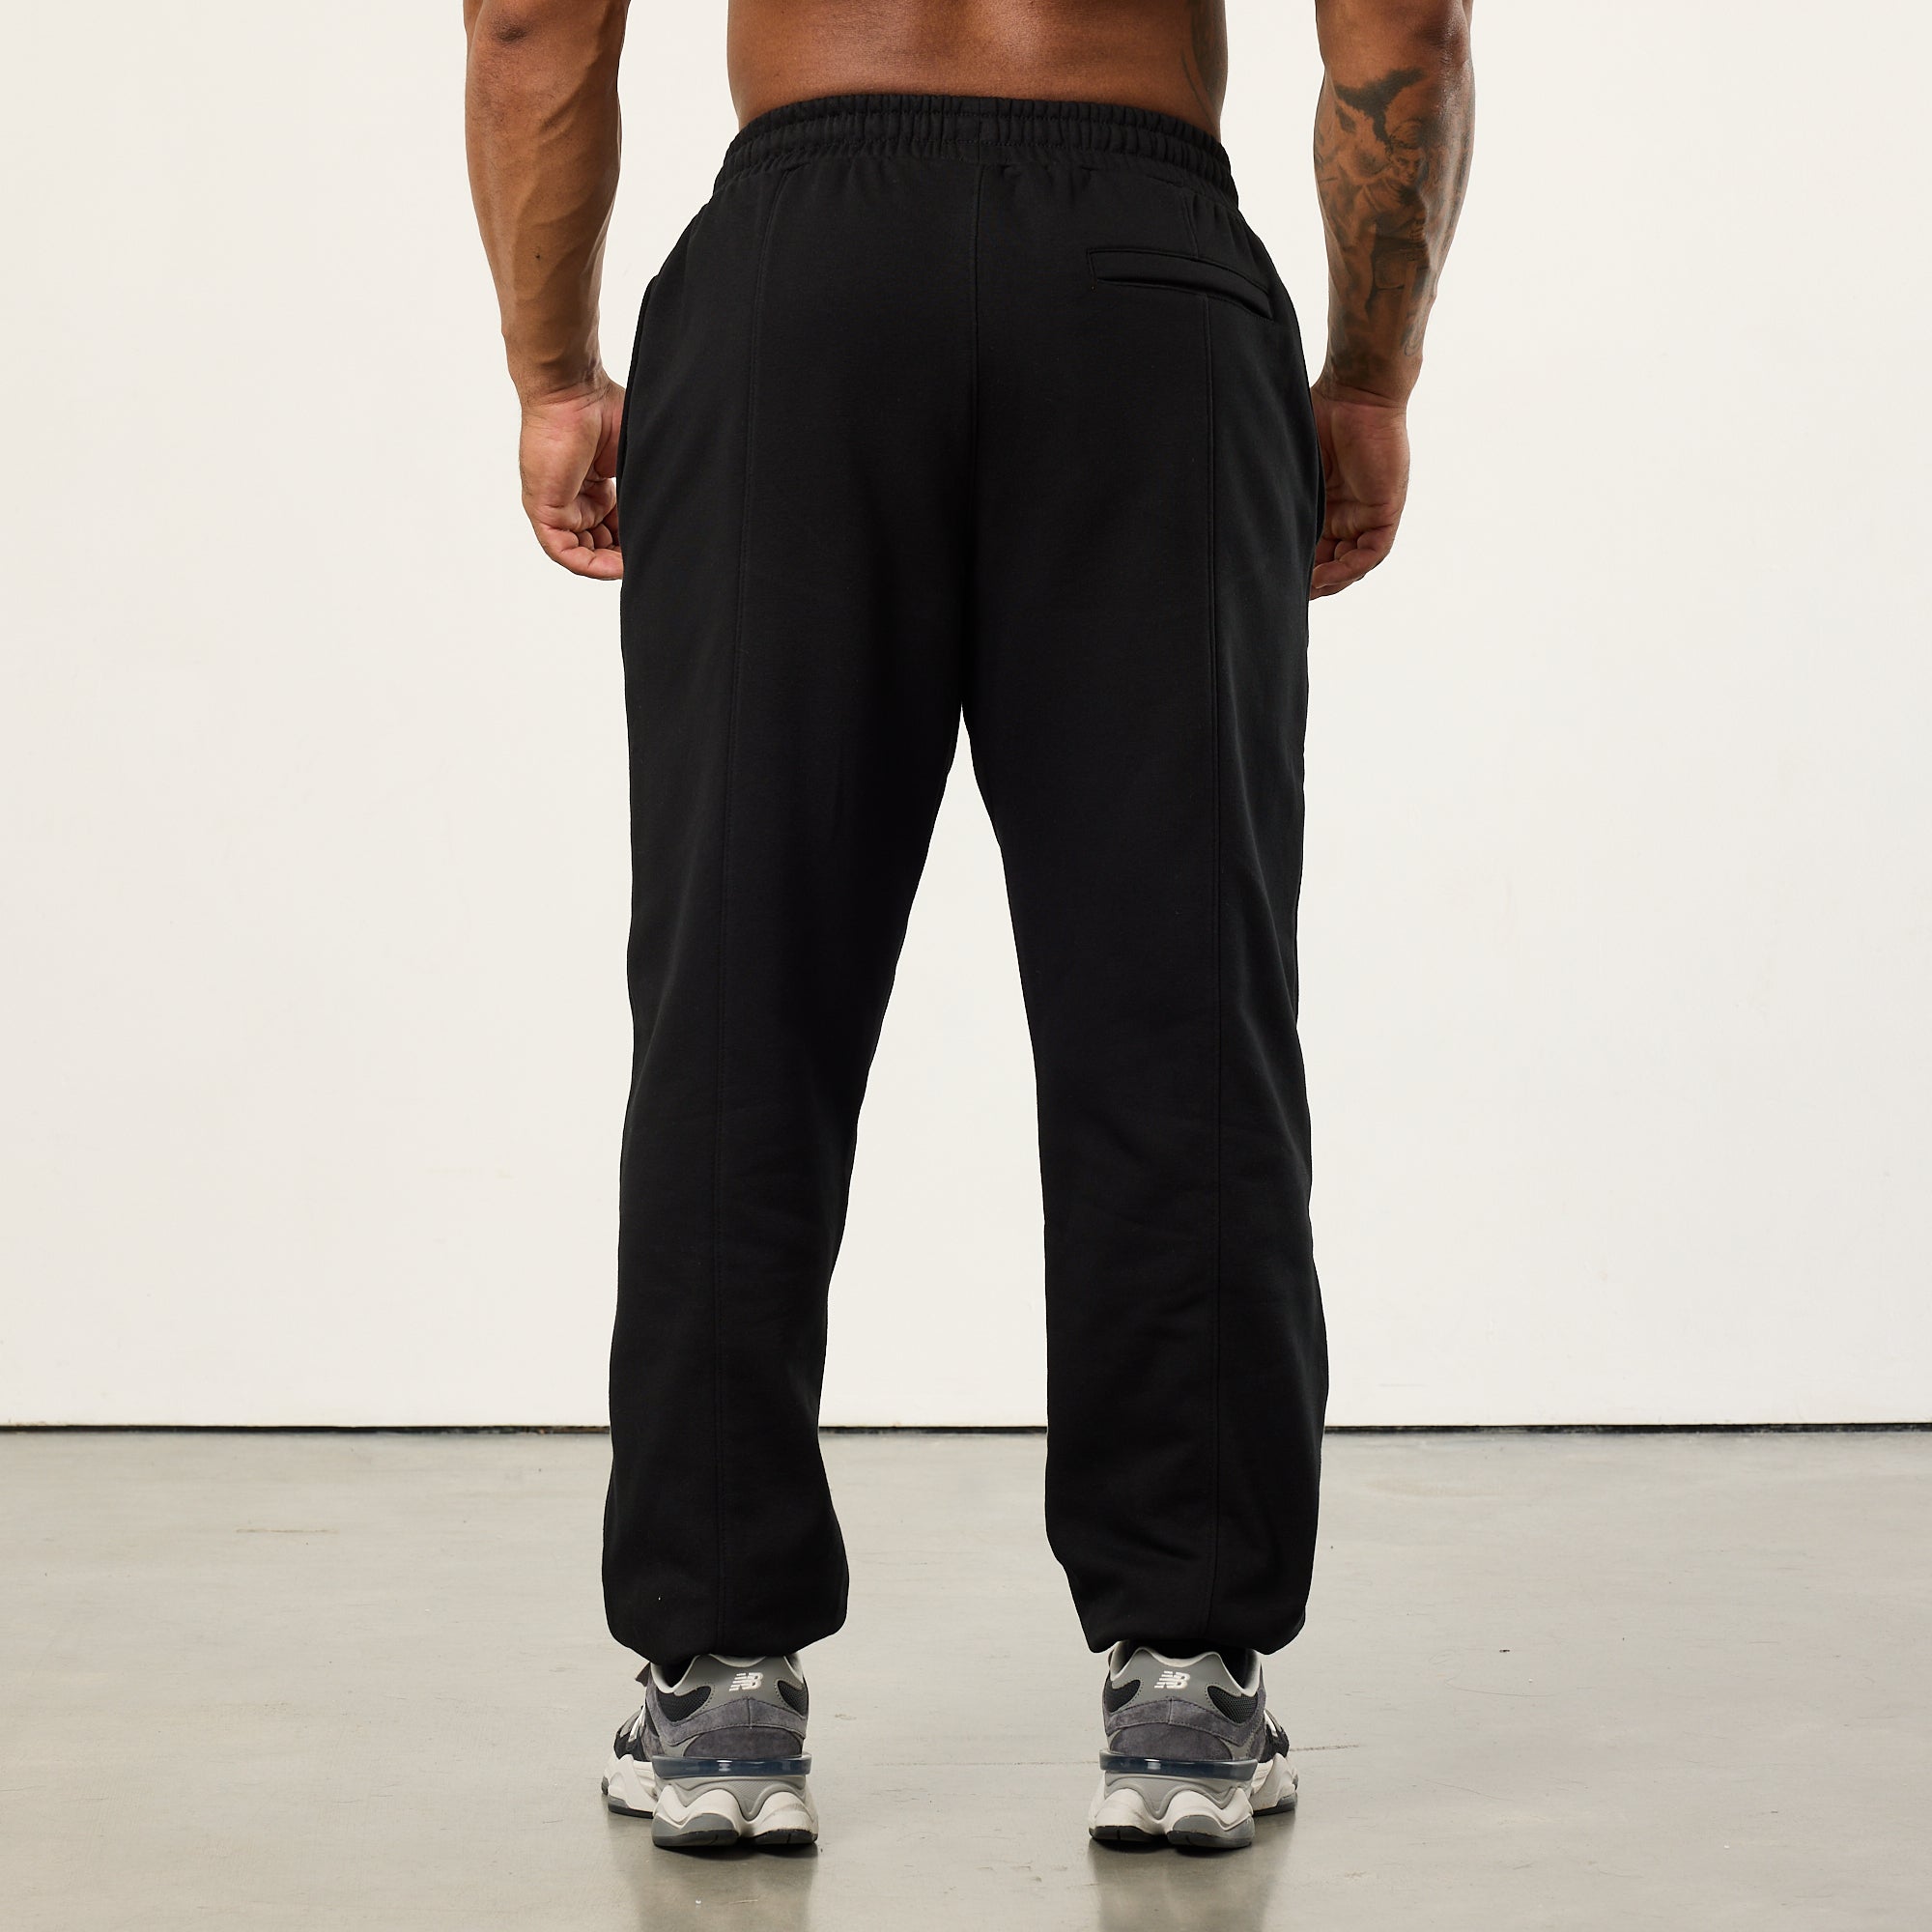 Vanquish Bodybuilding Black Oversized Sweatpants